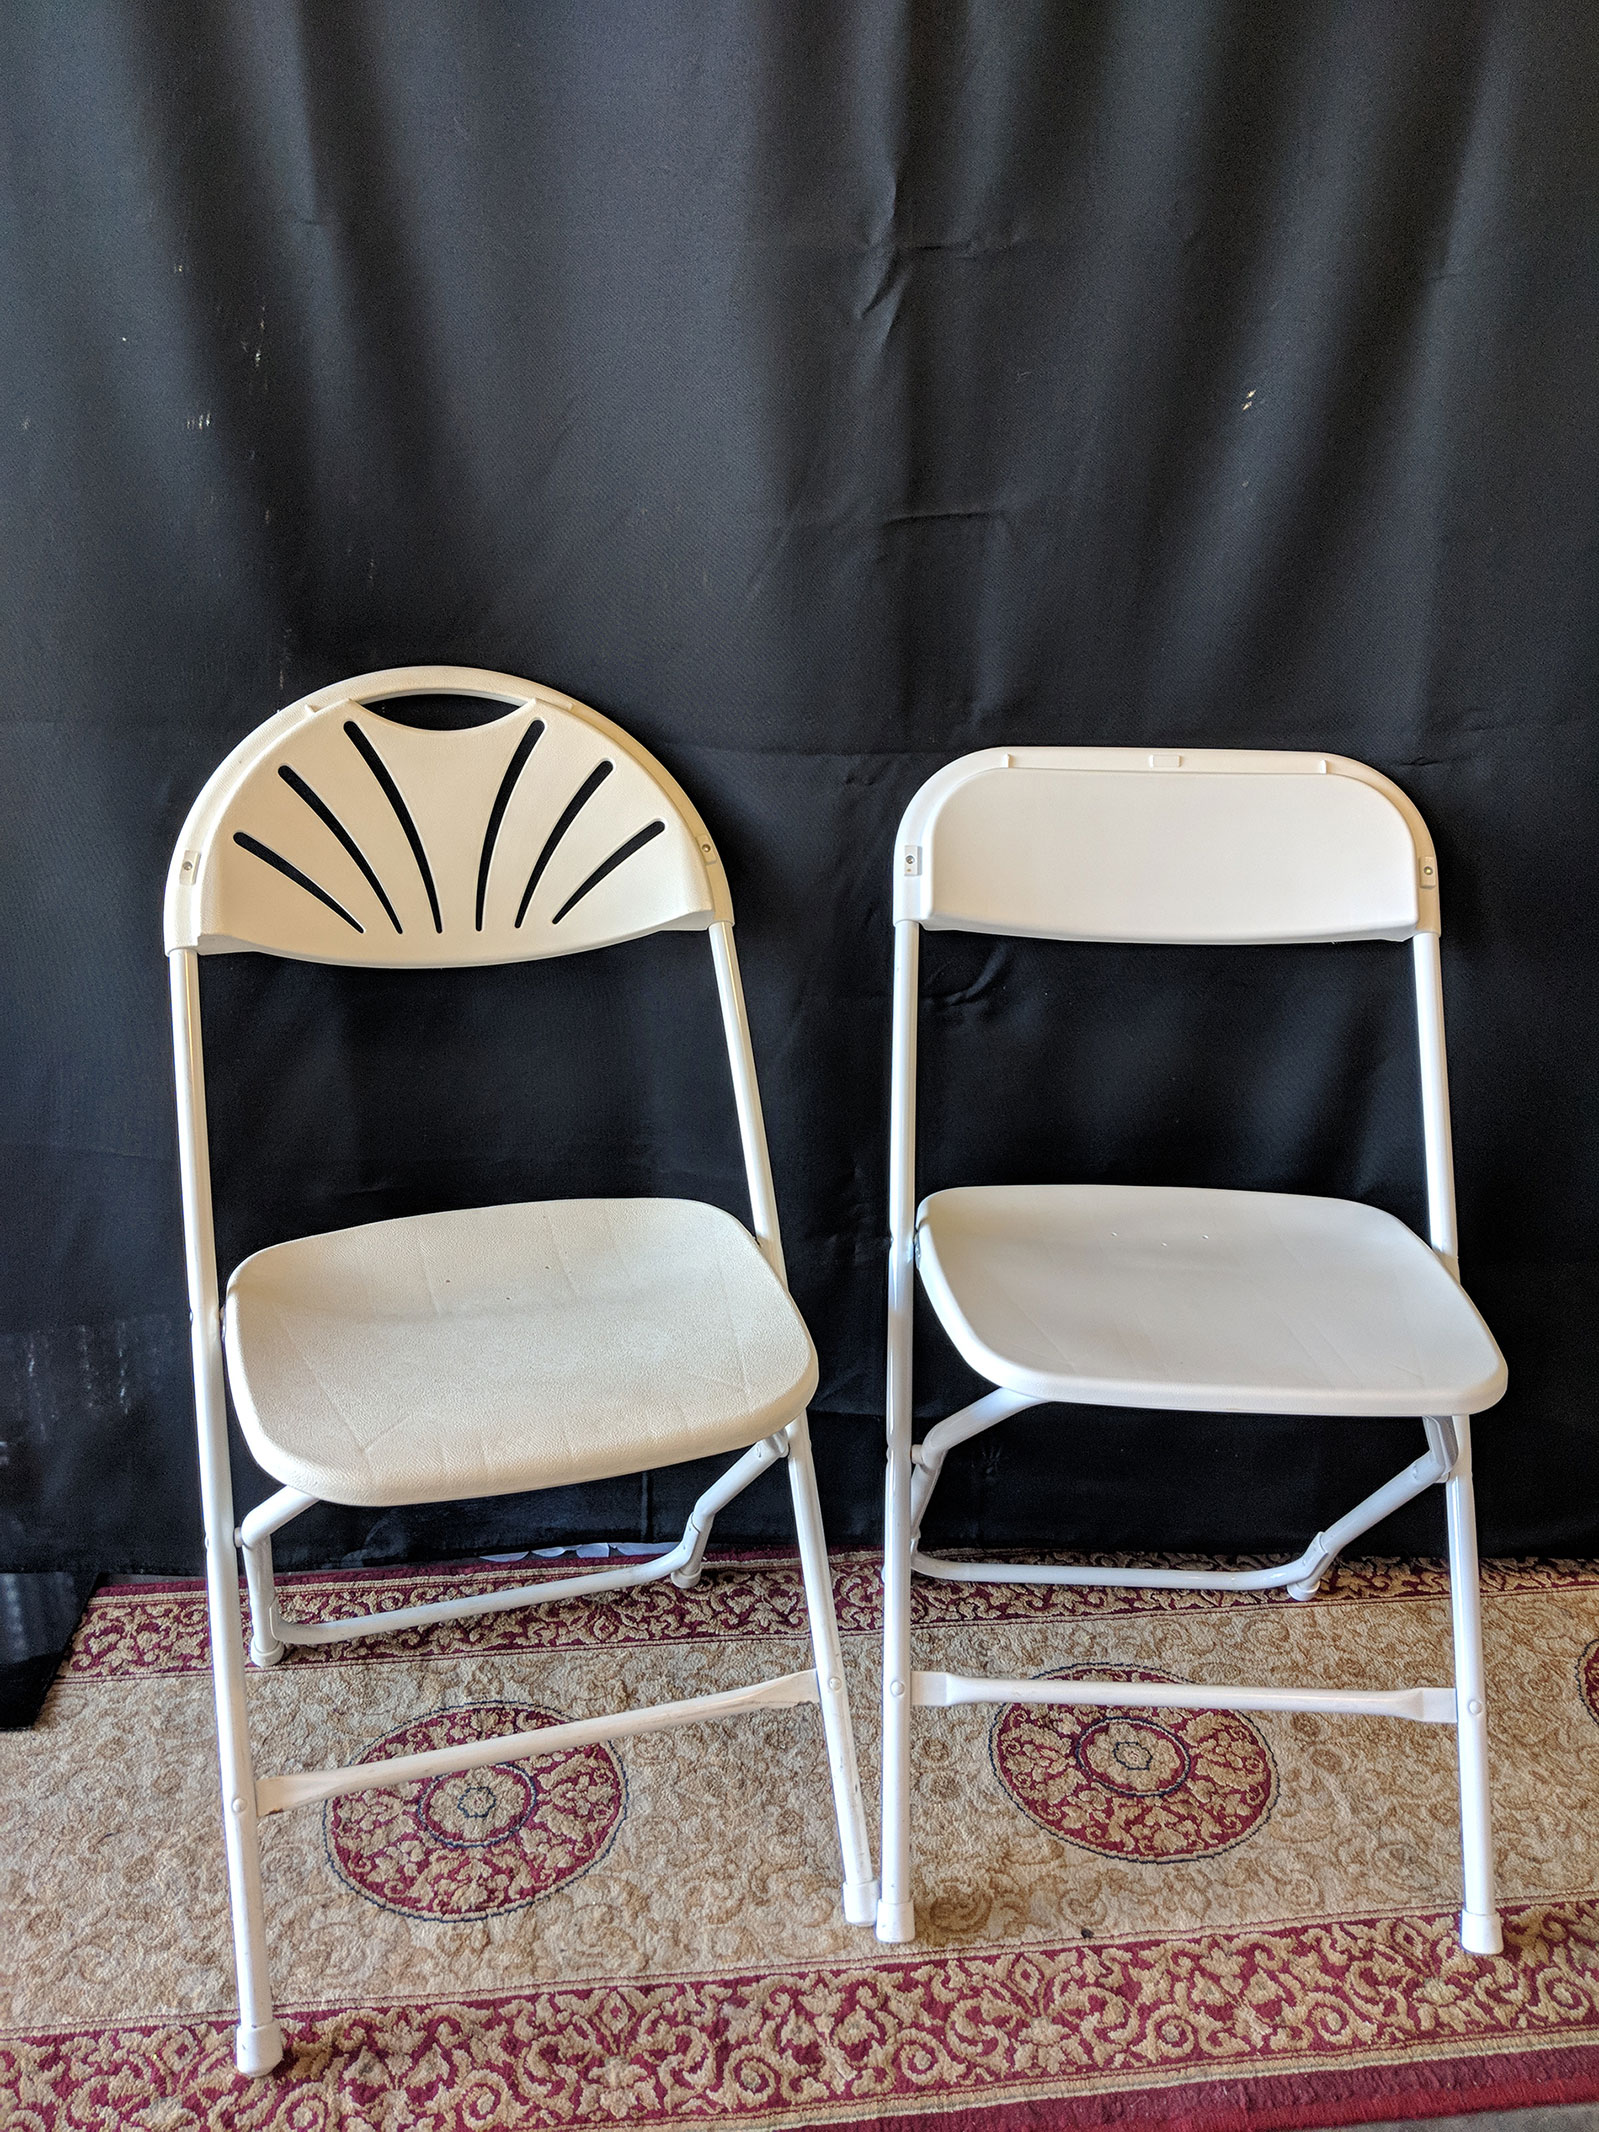 White Folding Chairs Rentals Brampton | KM Party Rental